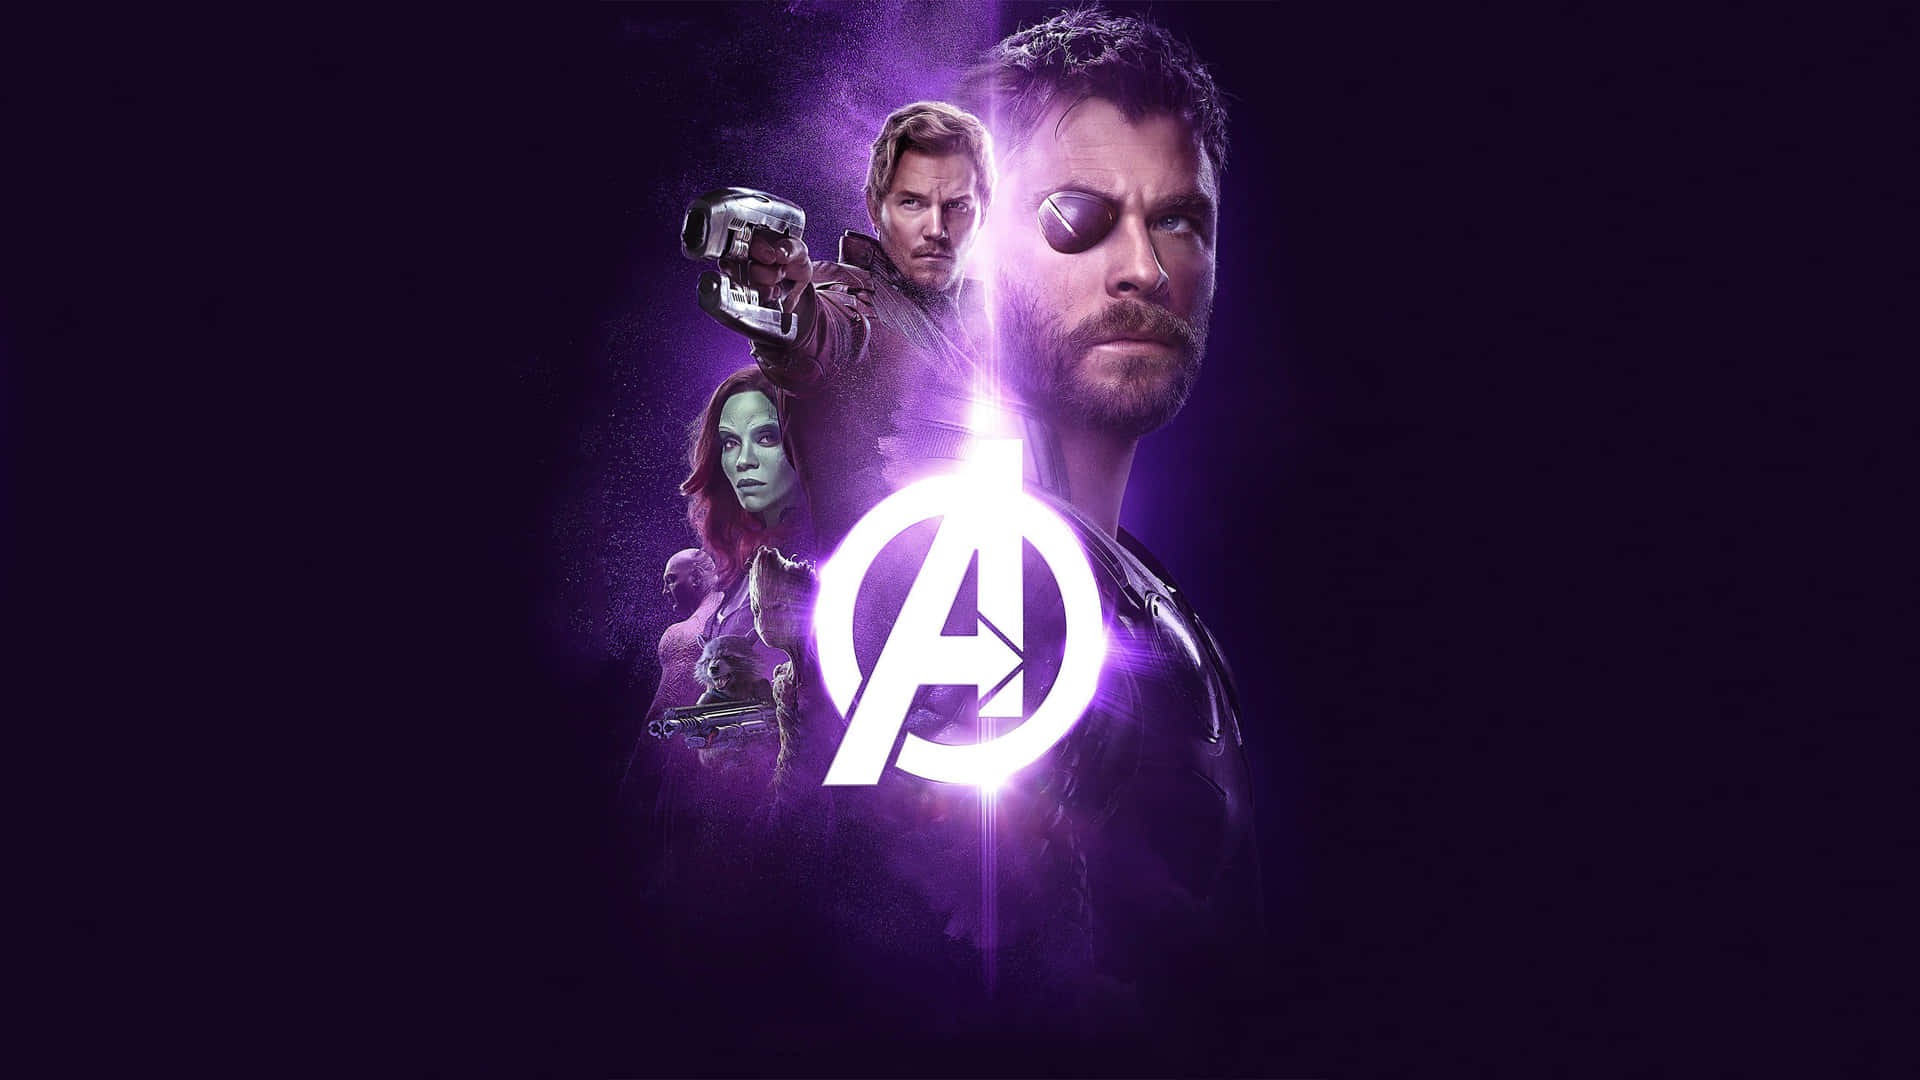 Sammen i kampen mod ondskab - Avengers: Infinity War Wallpaper